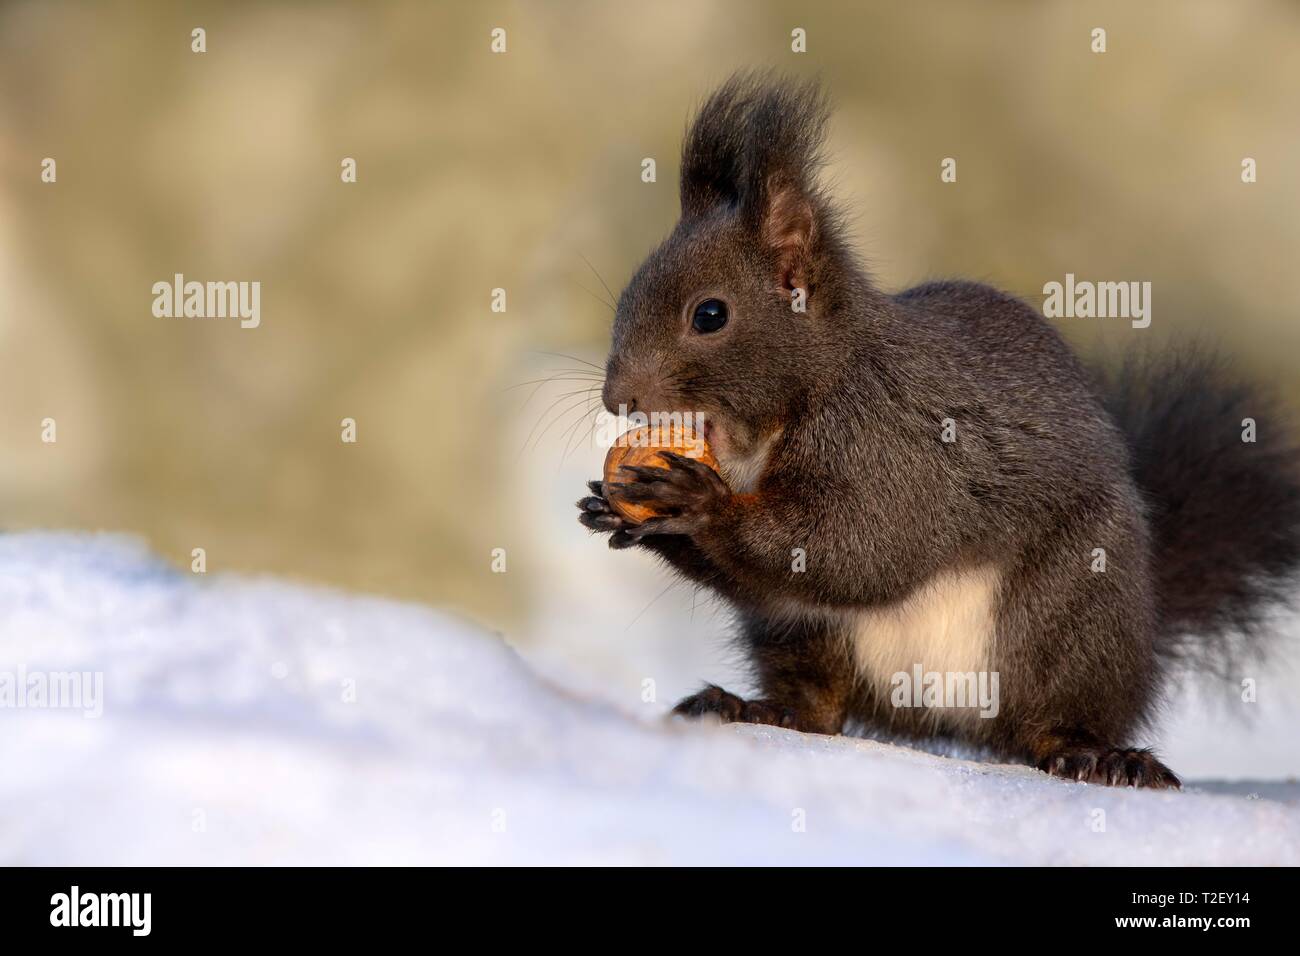 Eurasian red squirrel (Sciurus vulgaris), sitting in the snow and feeding a walnut in his paws, Austria Stock Photo